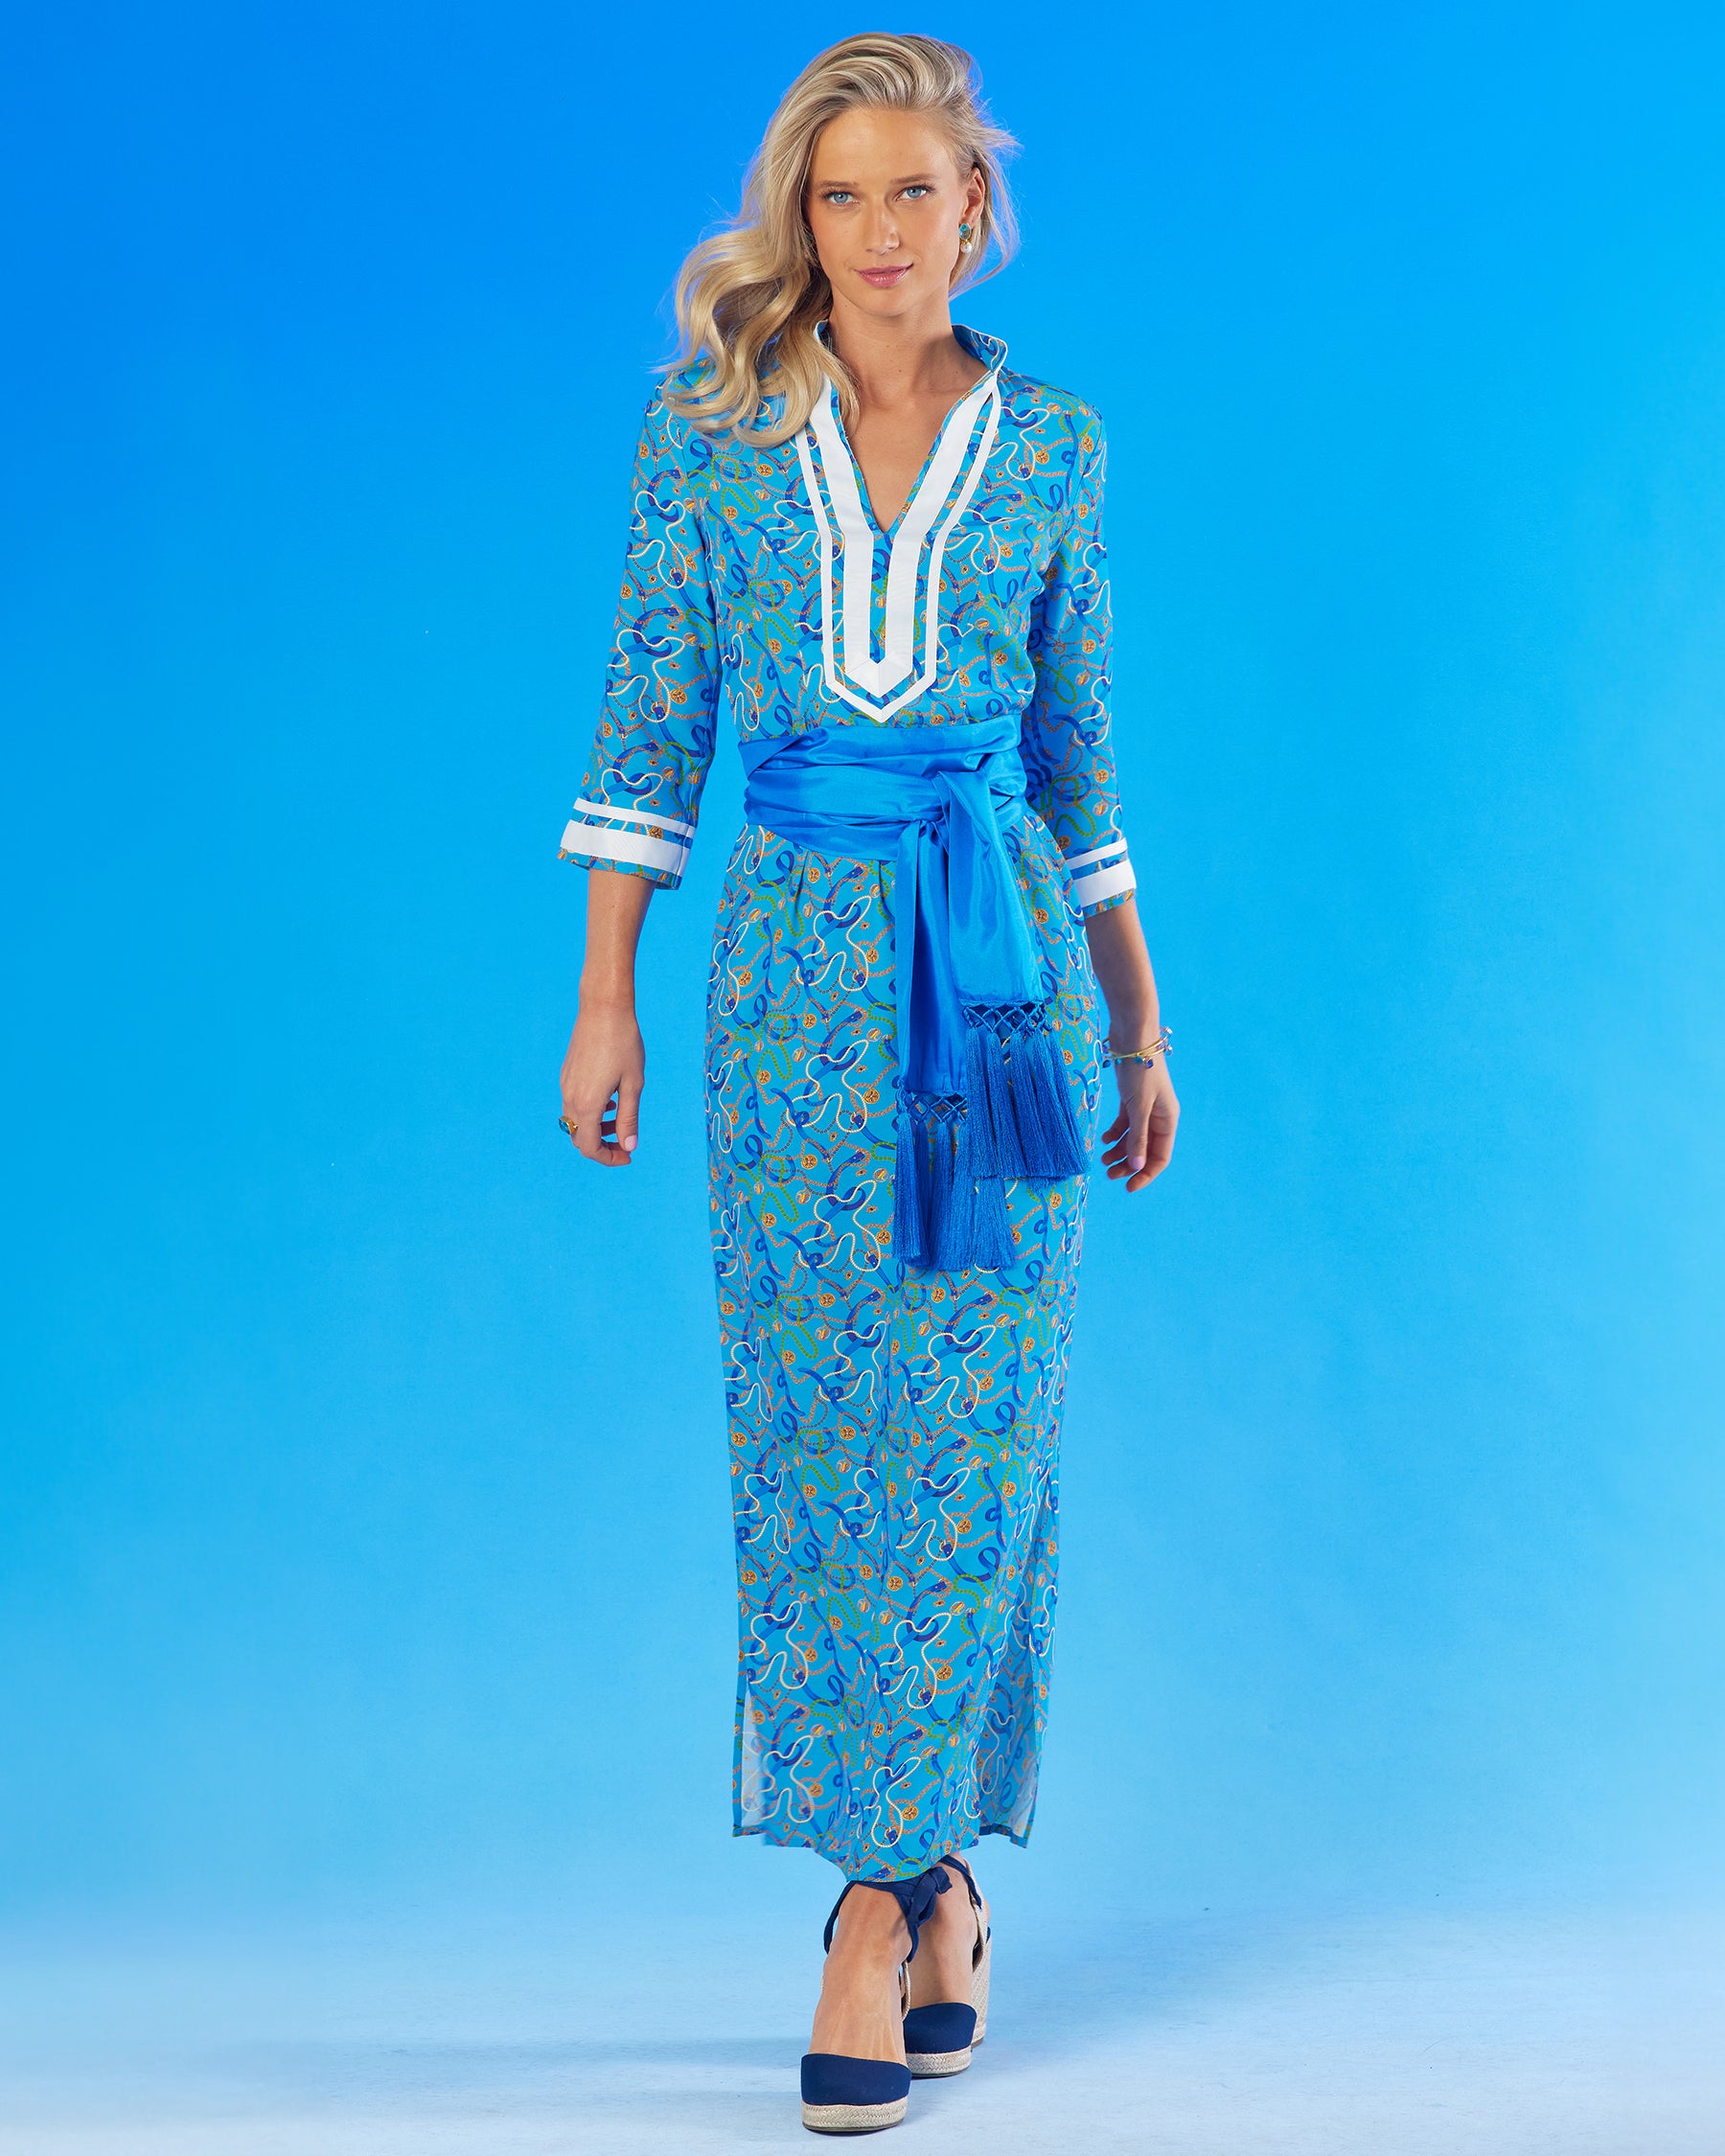 Cosima Sash Belt in Regency Blue worn with the Capri Long Tunic Dress in Nautical Motifs